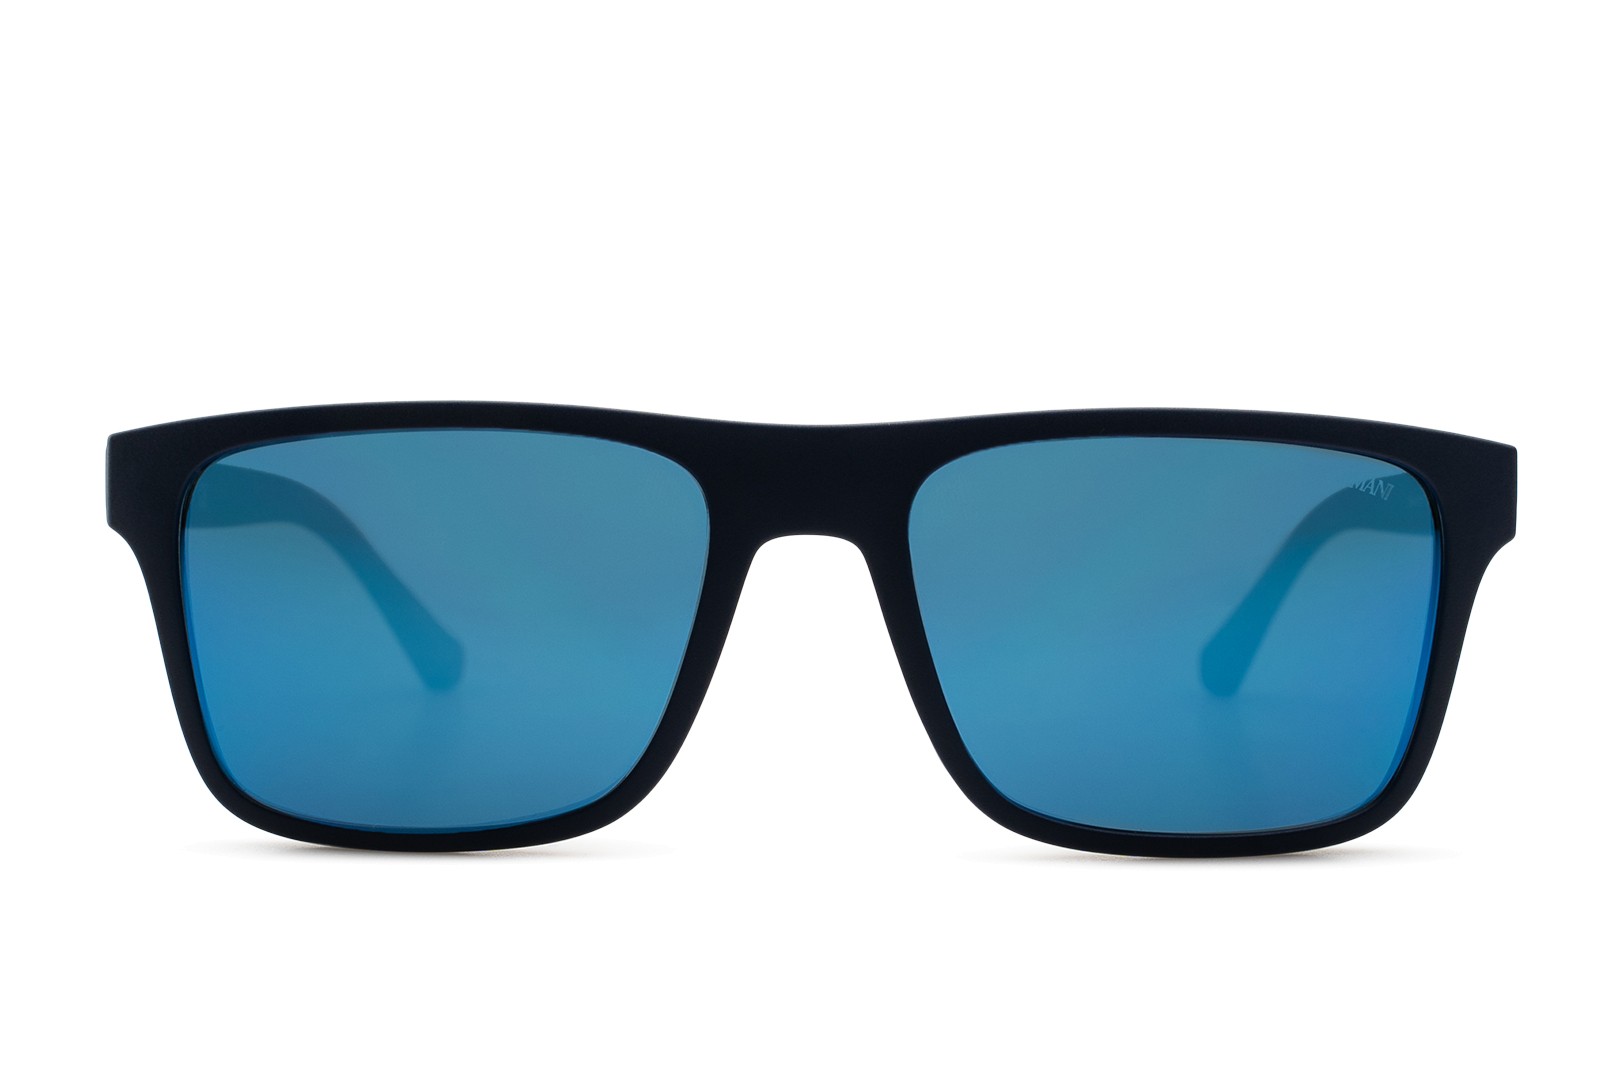 Emporio Armani Sunglasses Men's EA4115 5854/1W Blue w/ Two Clip-ons  52-18-145 | EyeSpecs.com